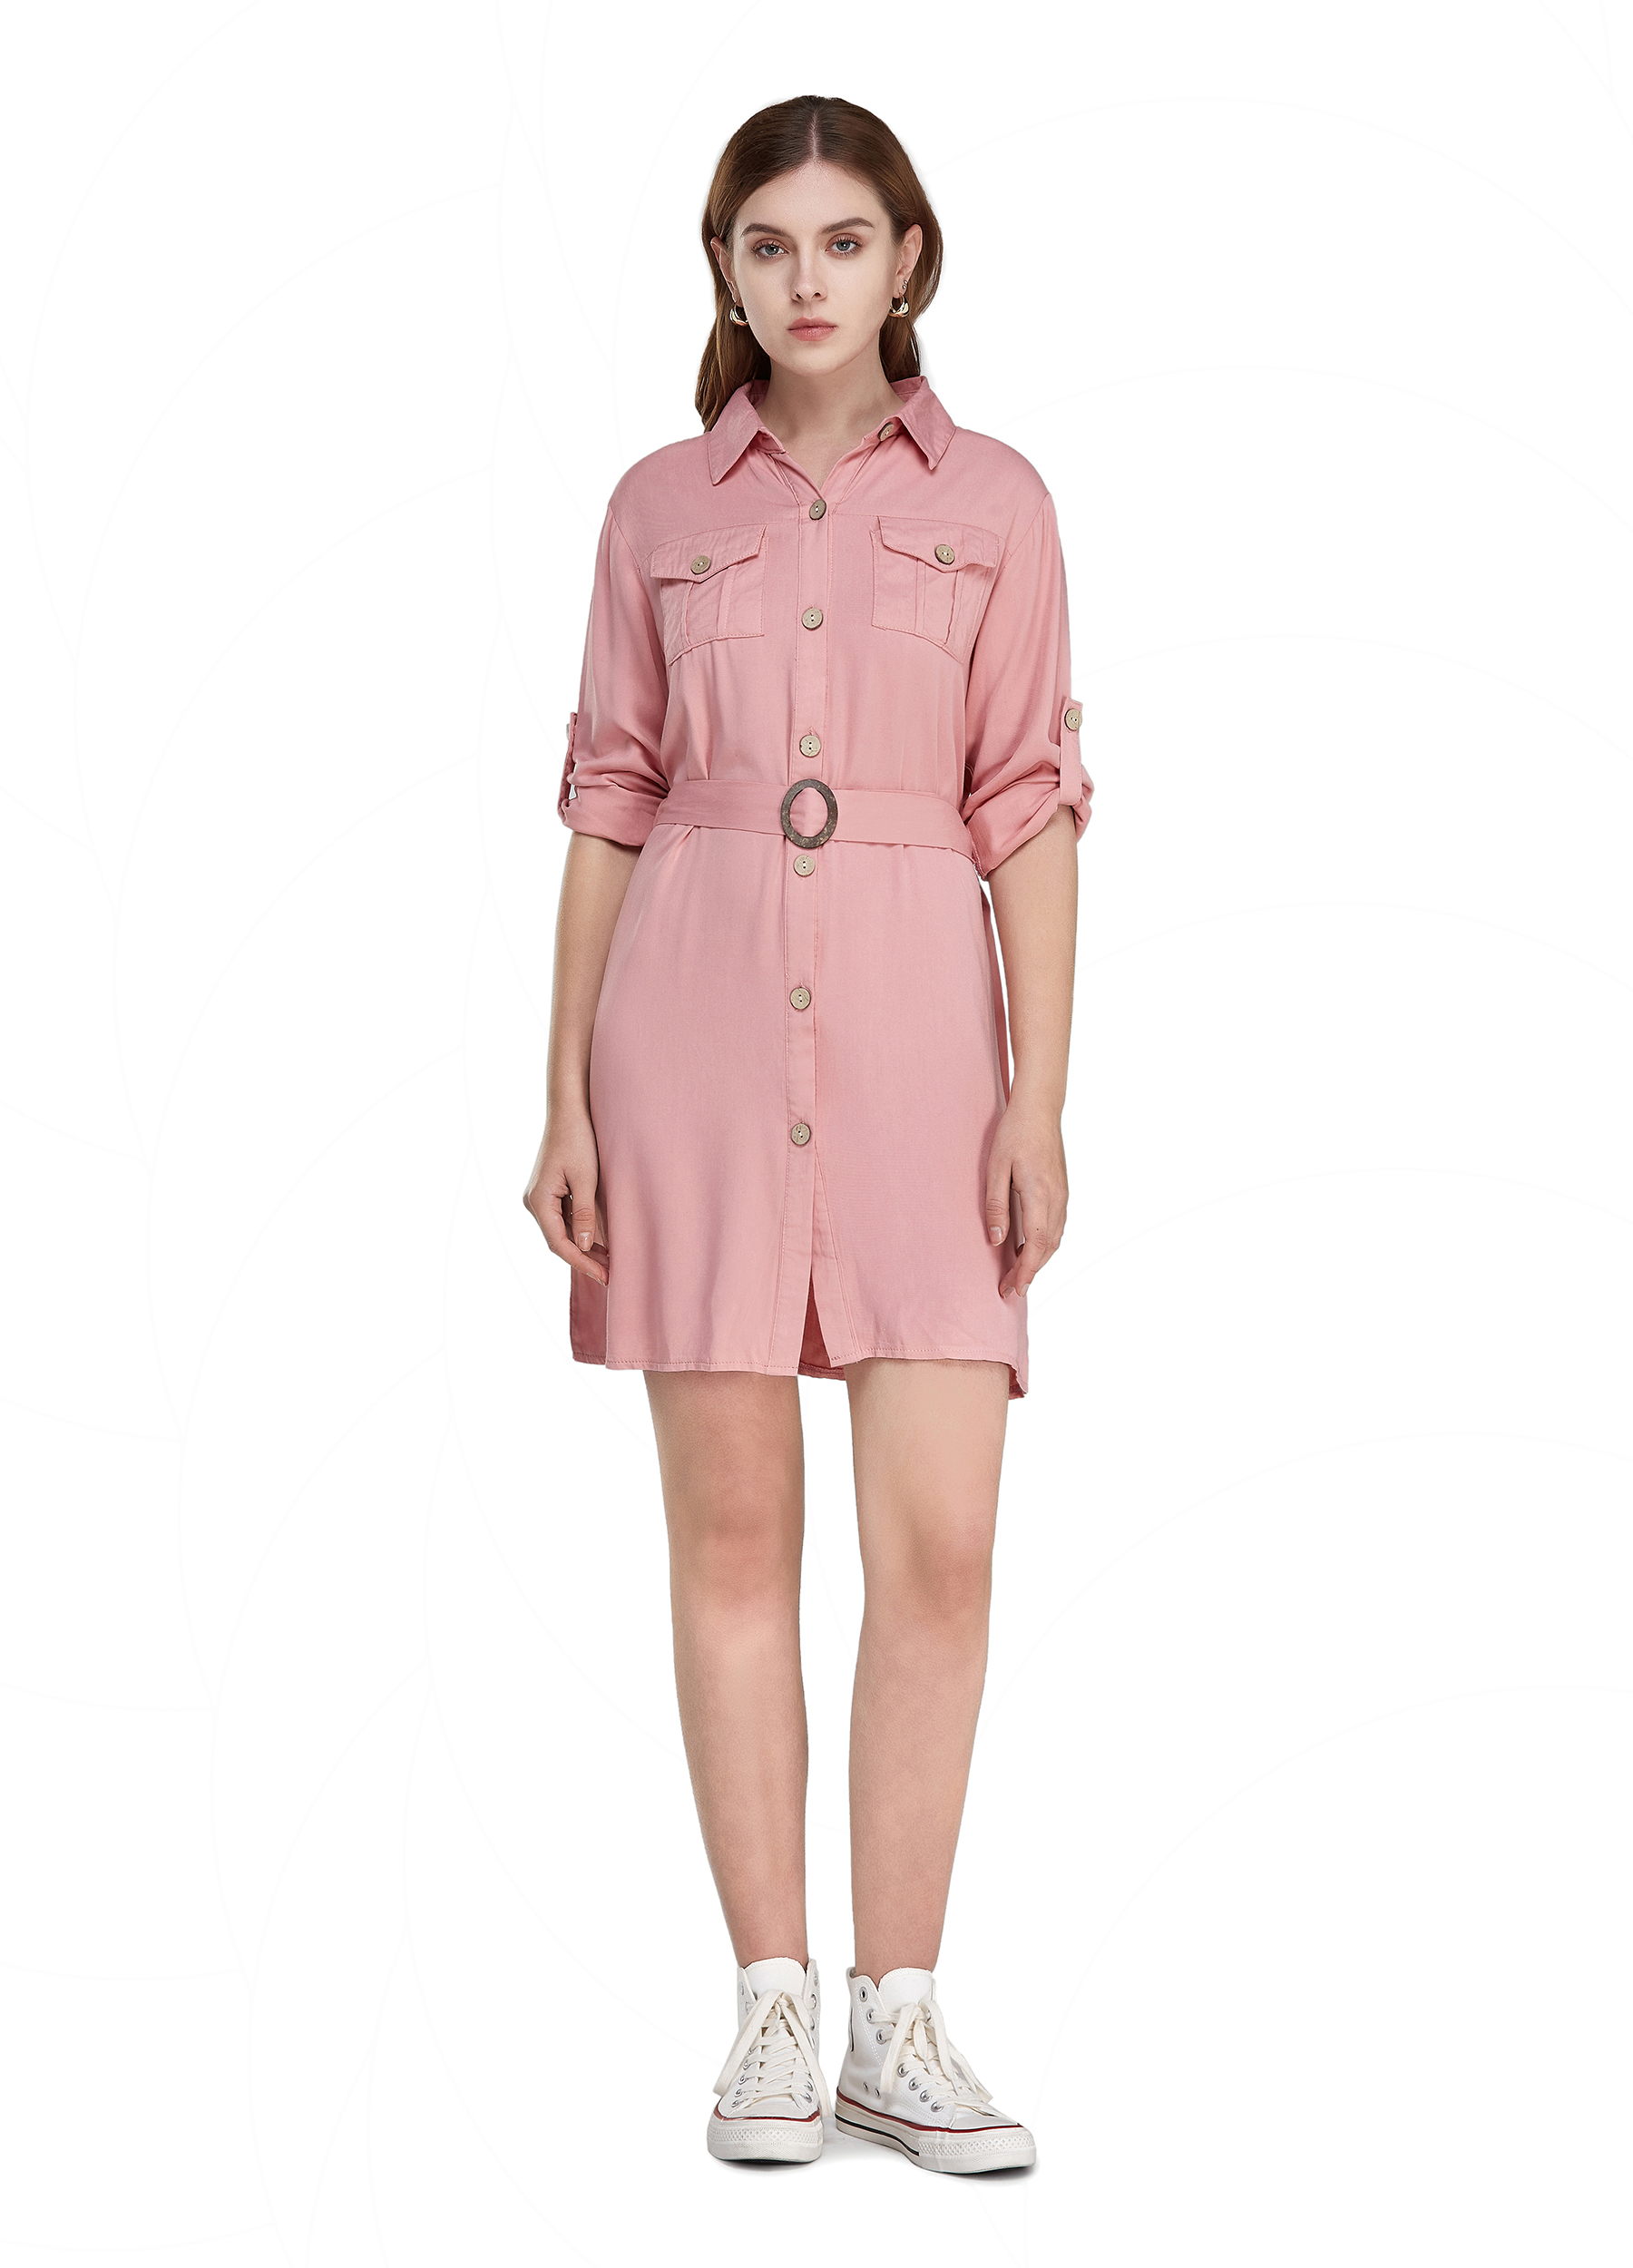 MECALA Women 3/4 Long Sleeve Button Down Shirt Dress Casual Midi Dress Pink L - image 2 of 10